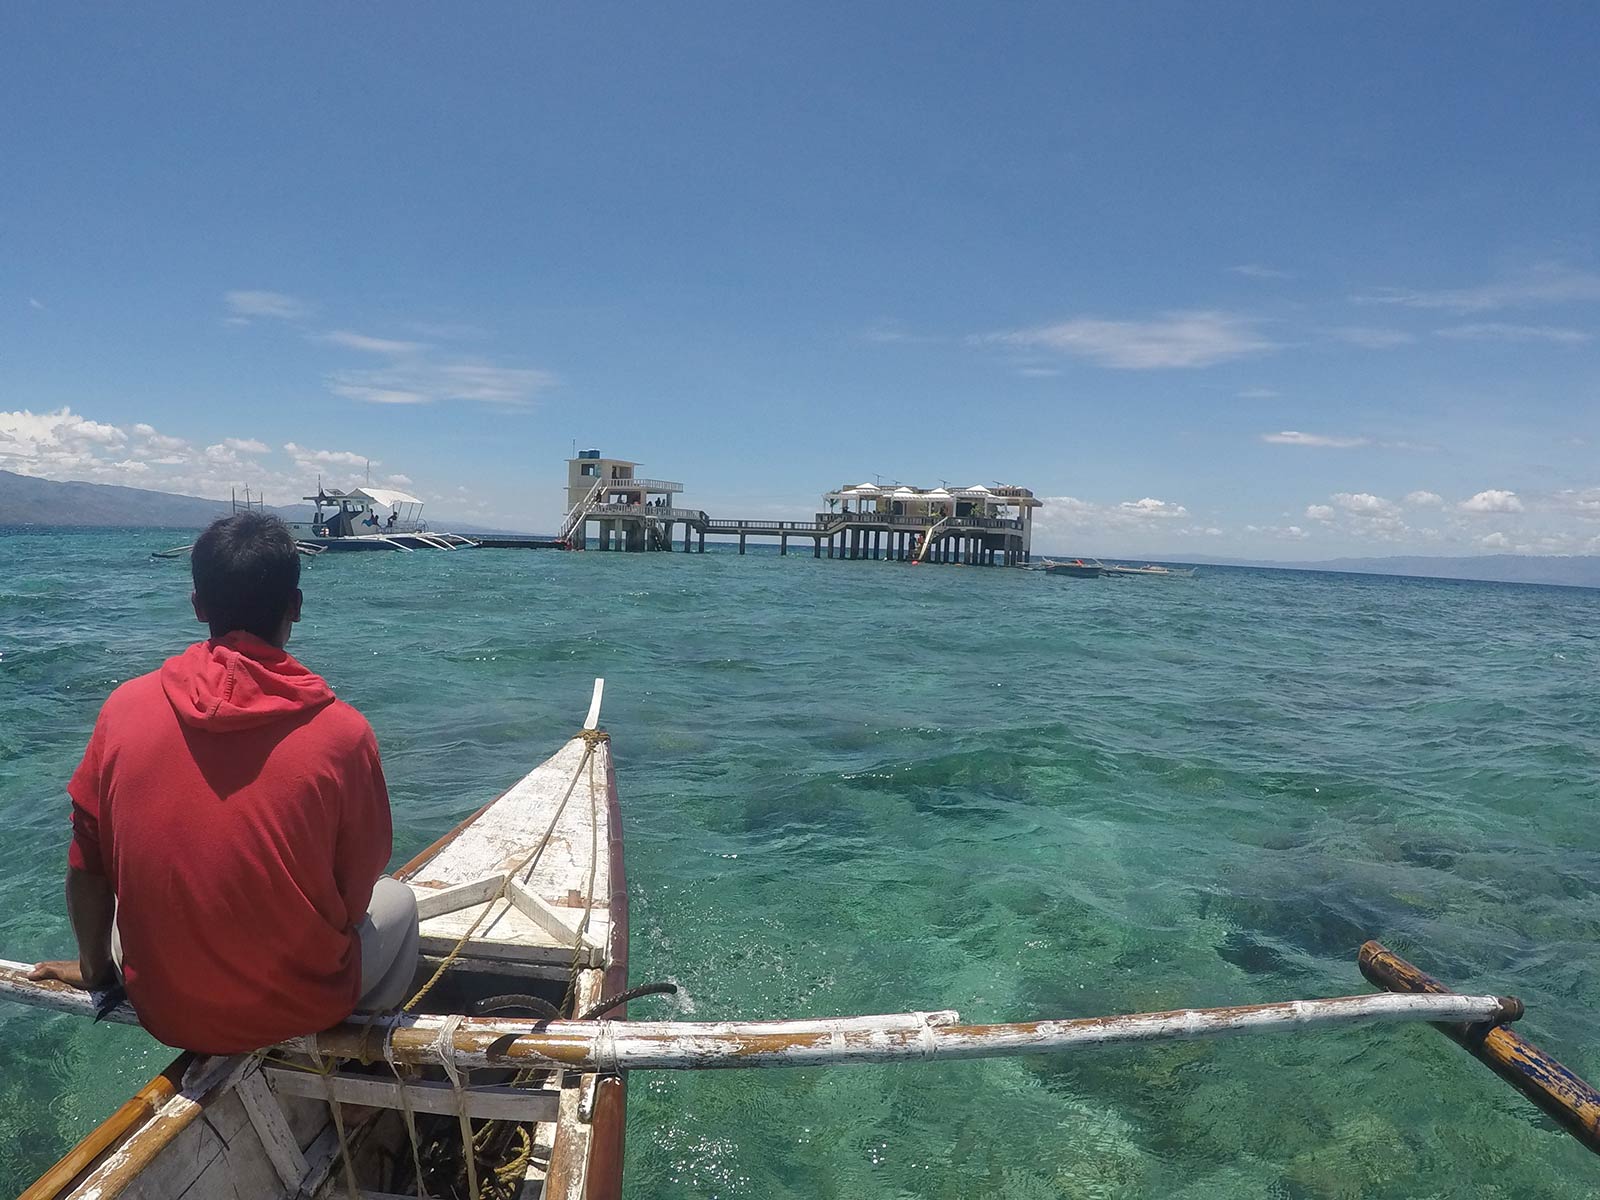 Approaching the building on stilt at Manjuyod Sandbar in Dumaguete, Philippines. Turtles at Apo Island & Dumaguete